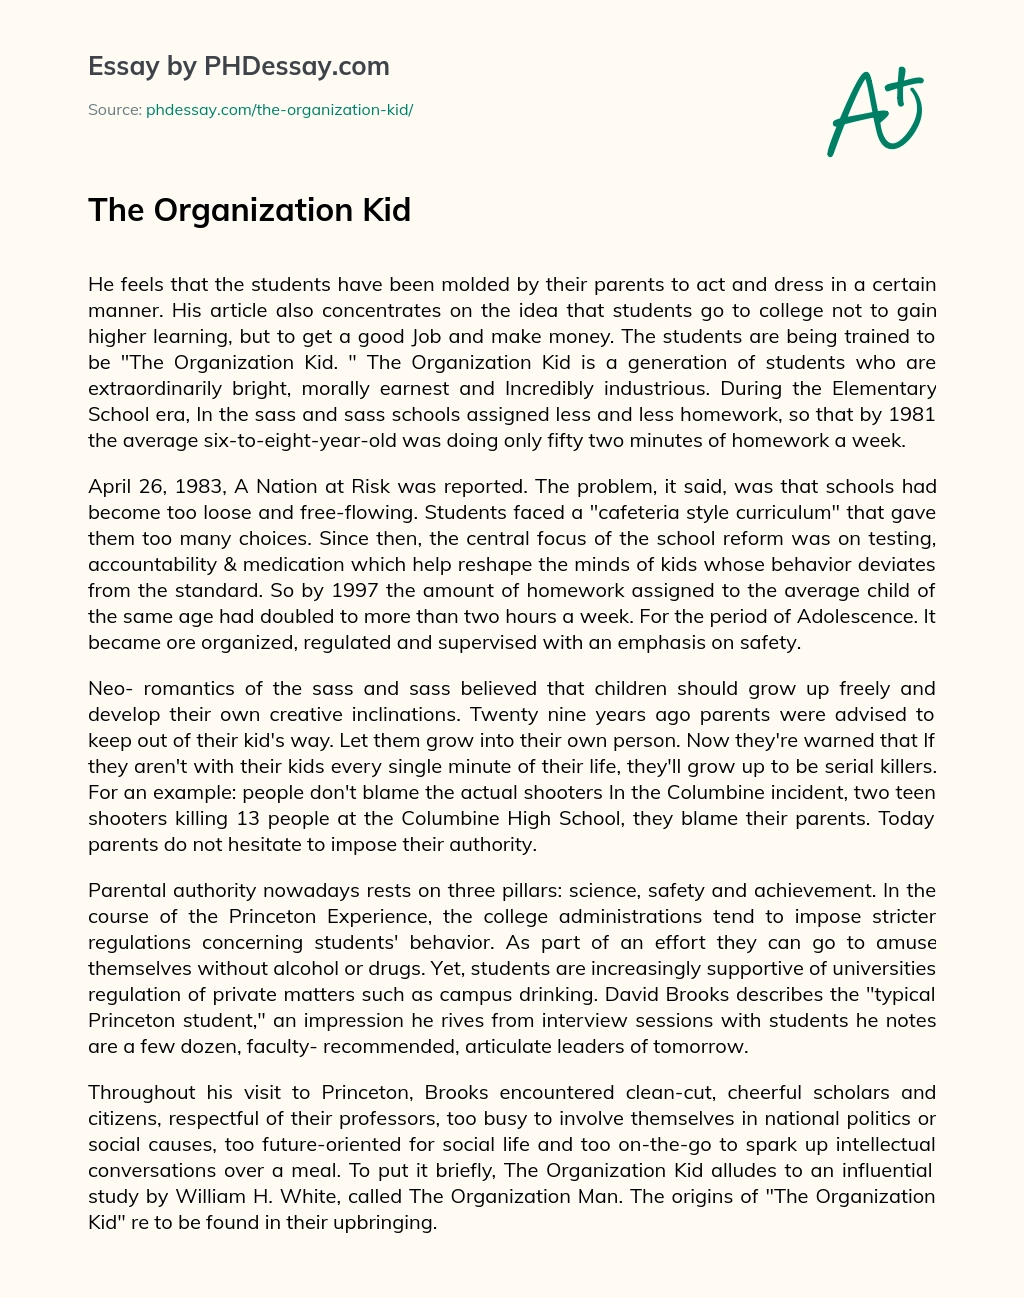 The Organization Kid essay